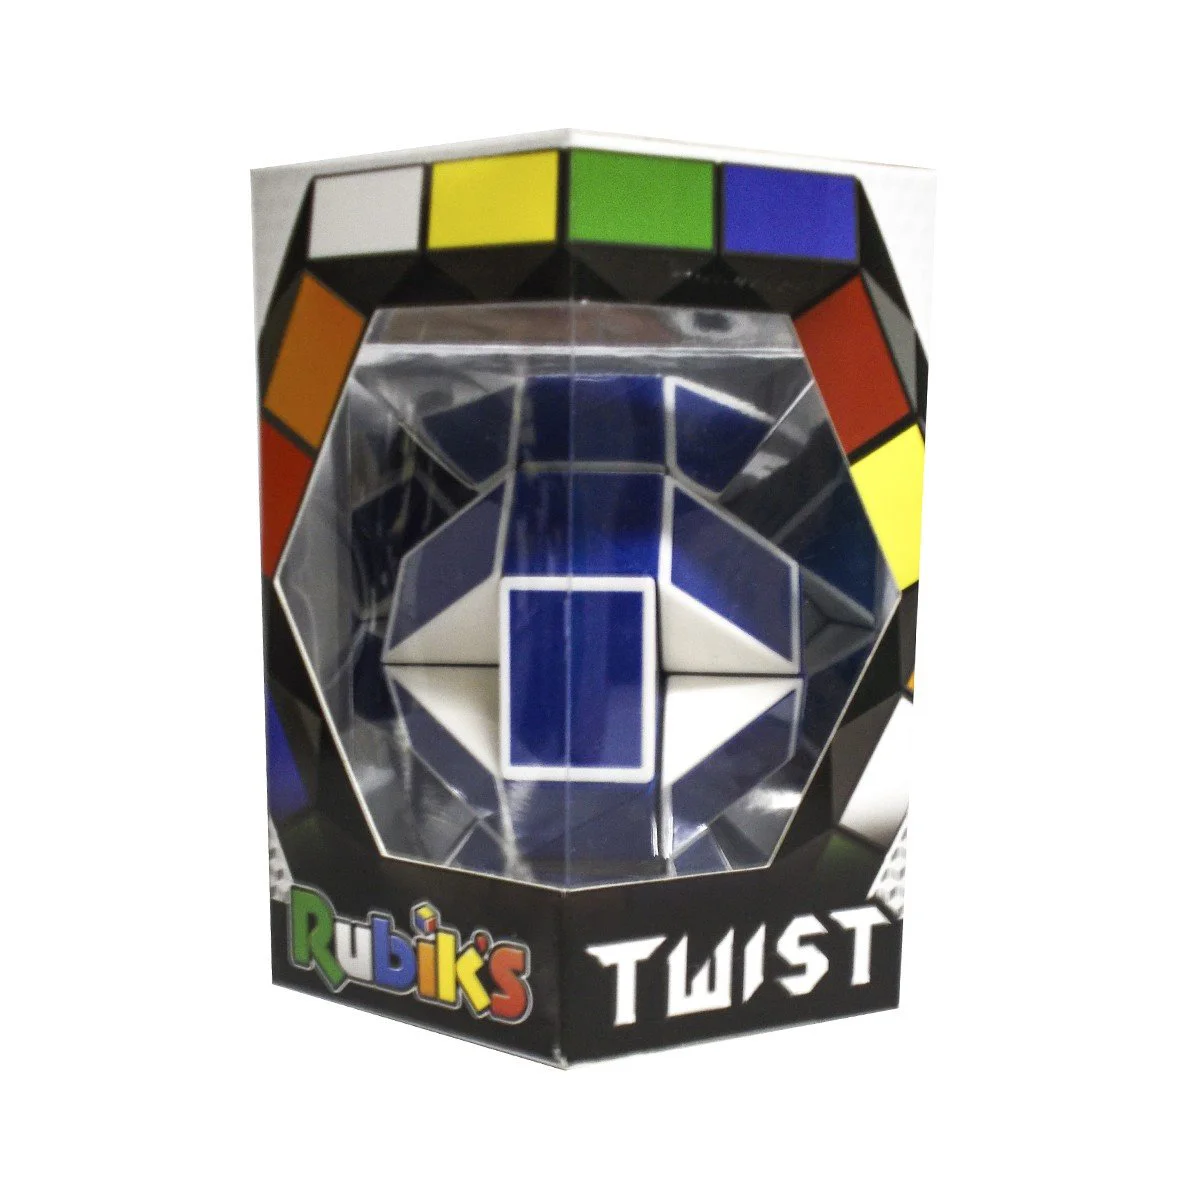 Головоломка Rubiks Змейка (бело-голубая)